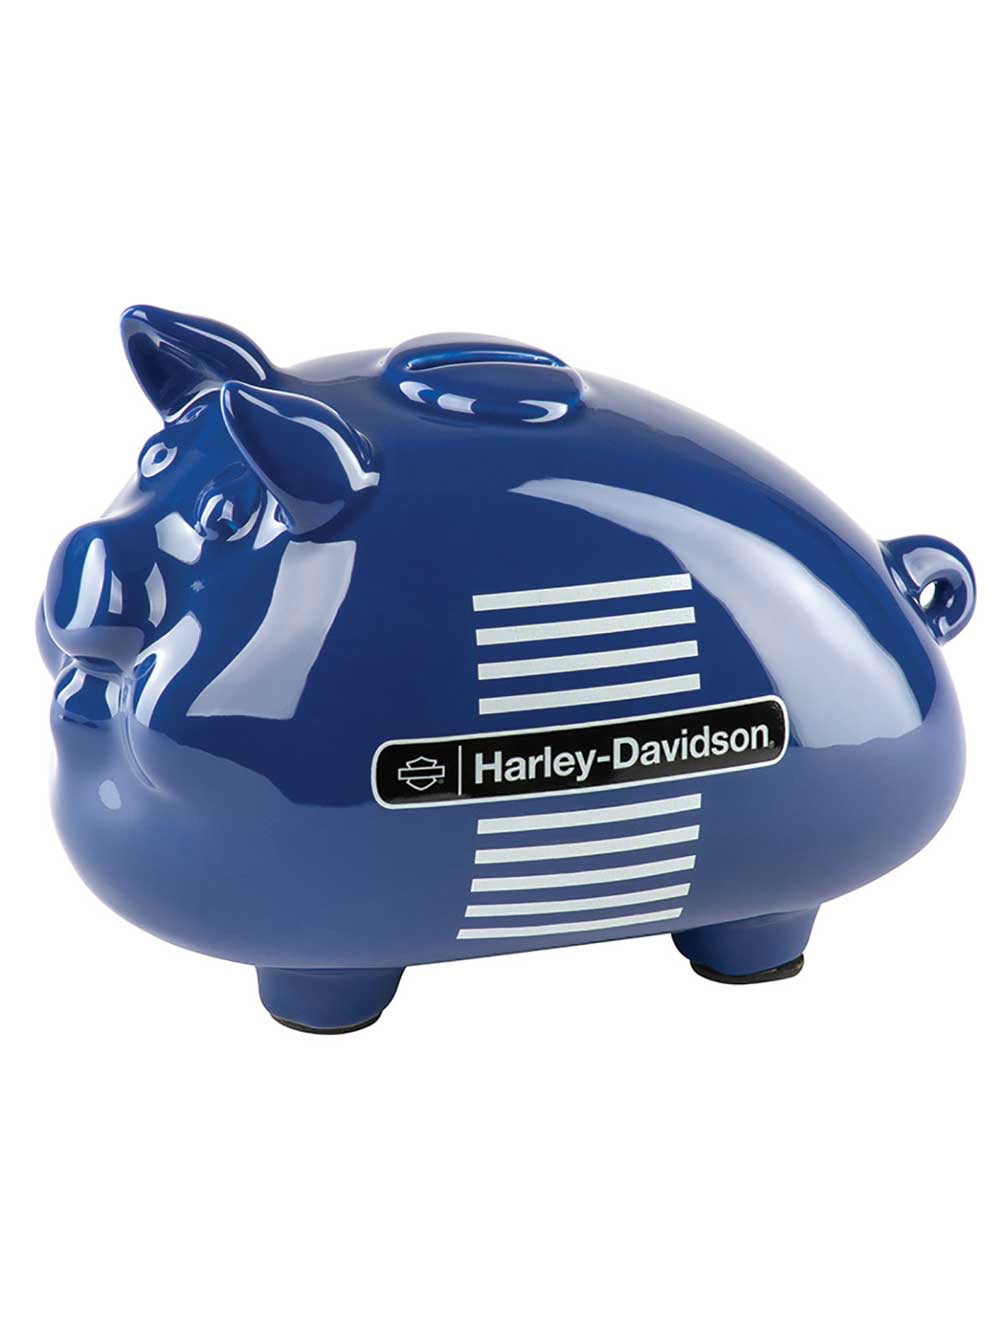 HD Mini Hog Bank Sparschwein Harley Davidson Spardose Piggy Bank 